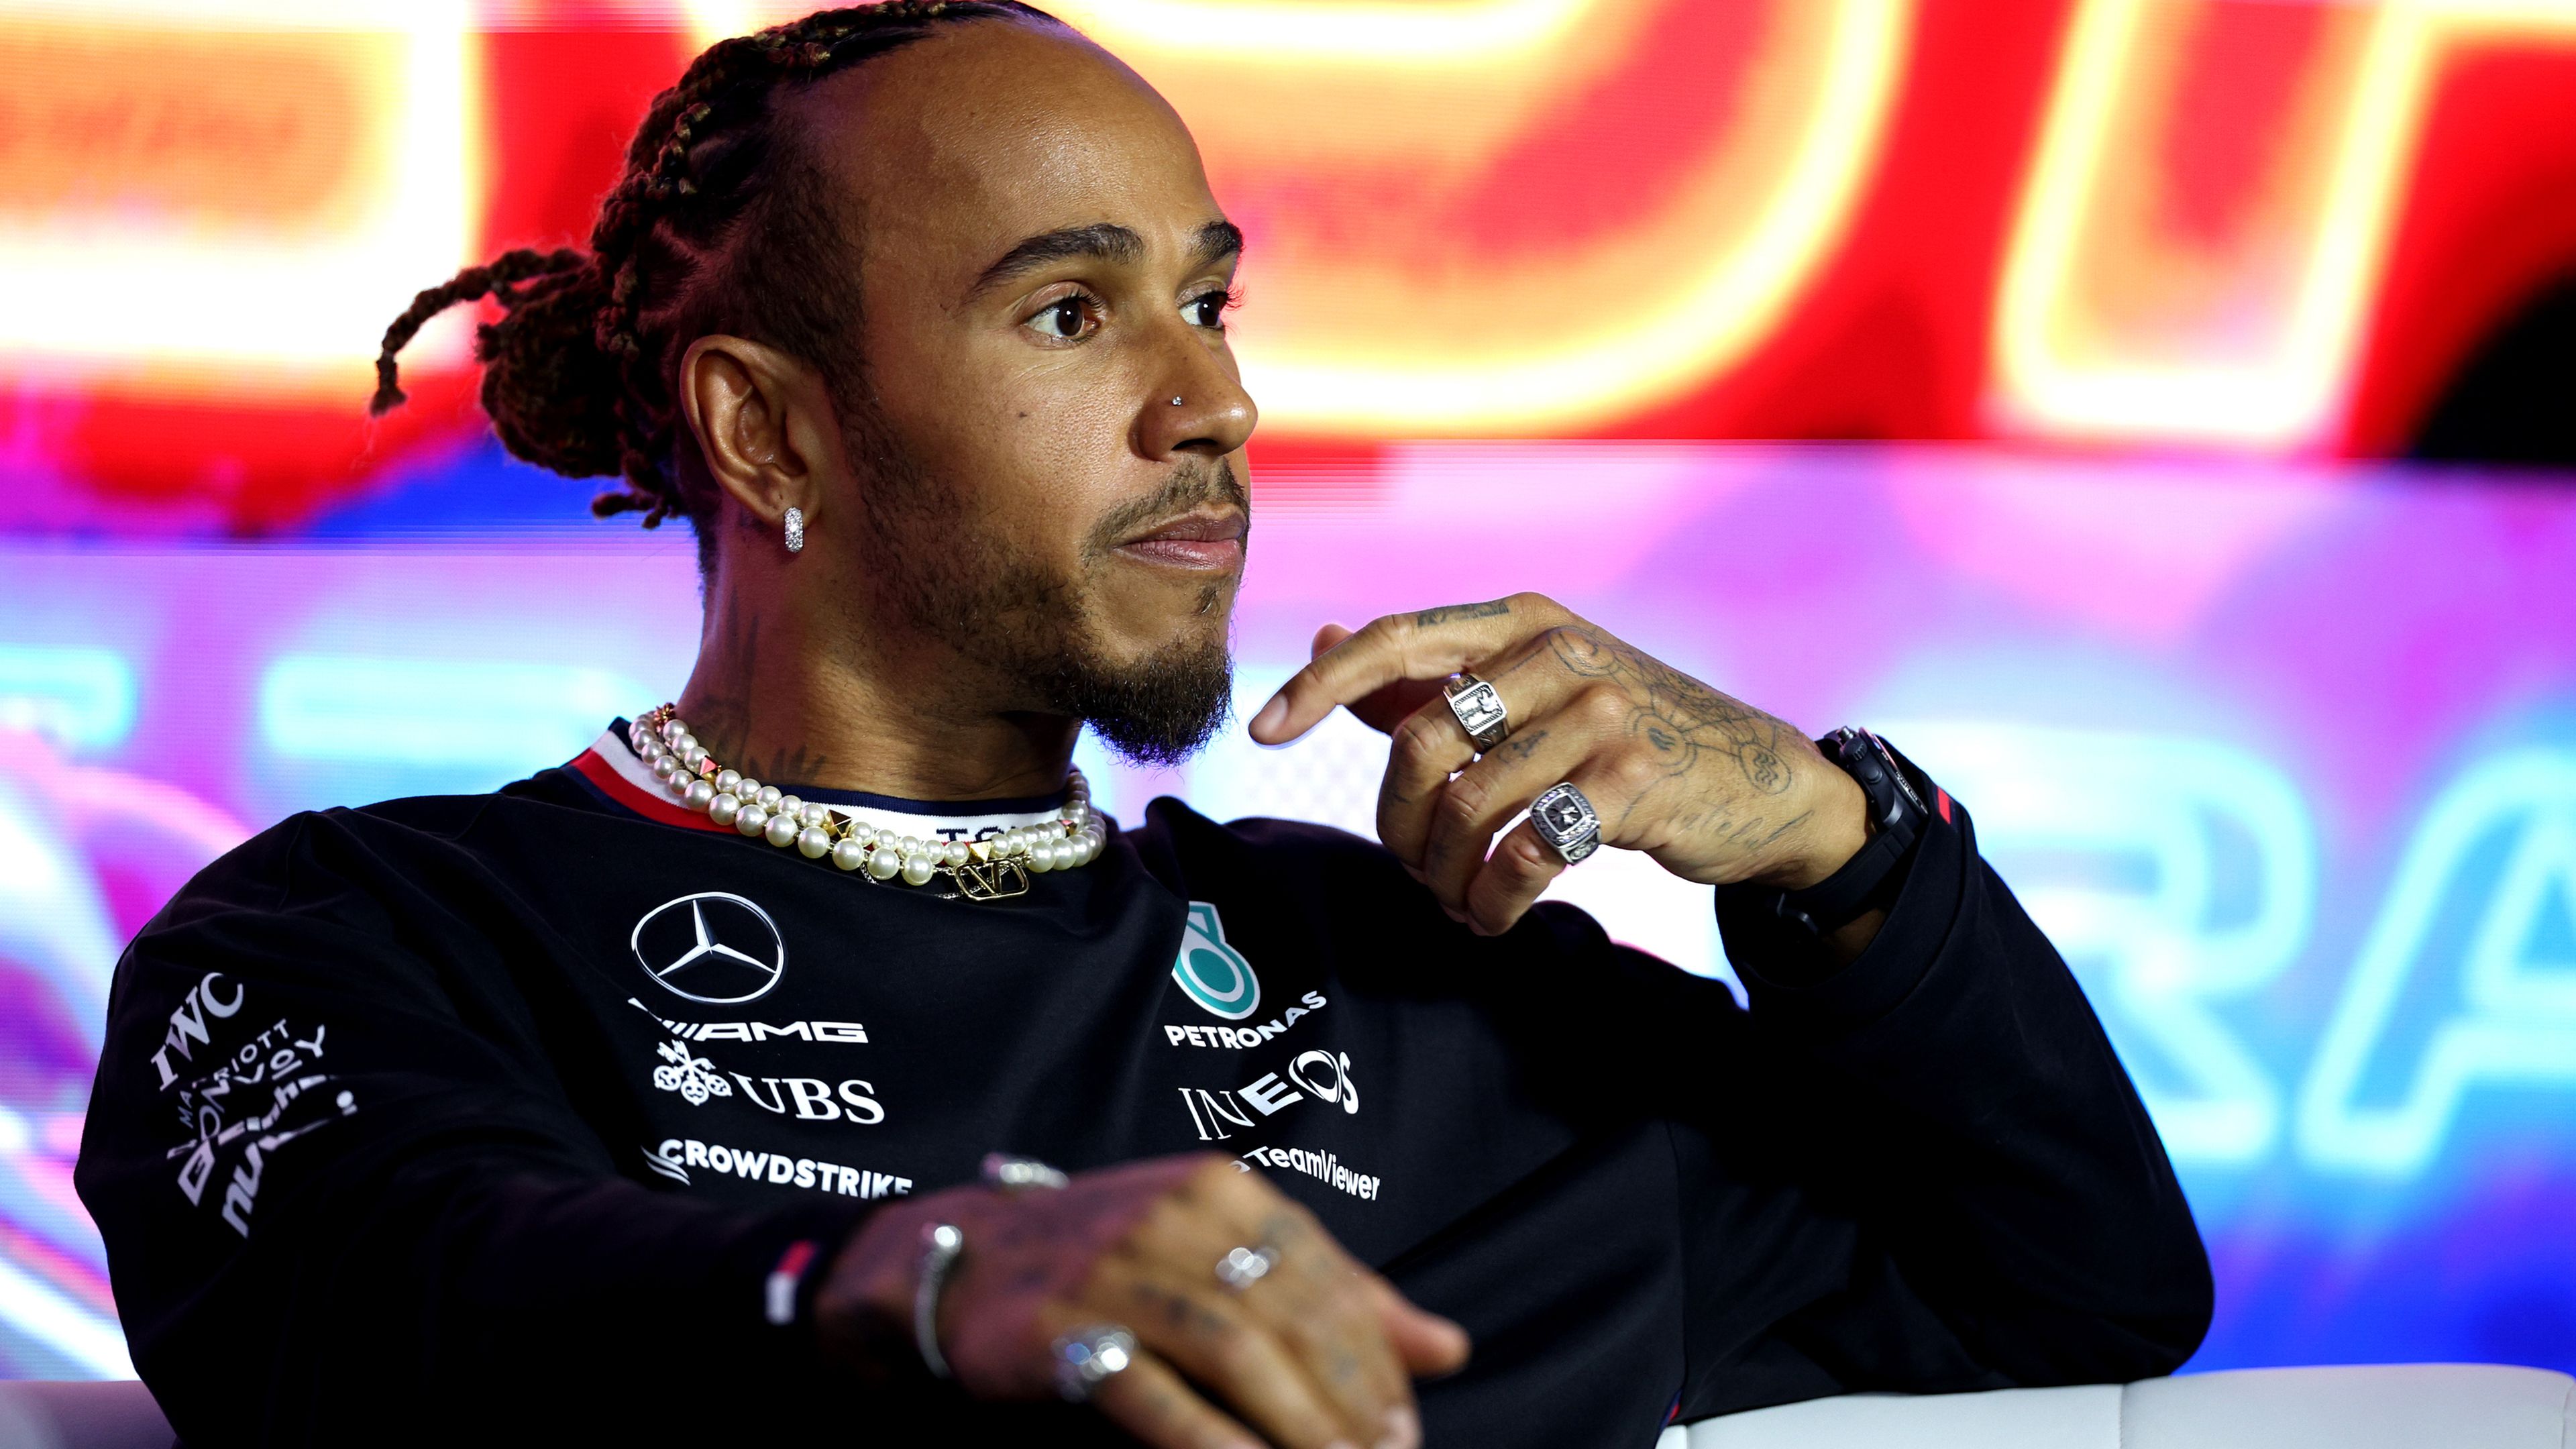 Lewis Hamilton 'set to join Ferrari' as secret Mercedes contract